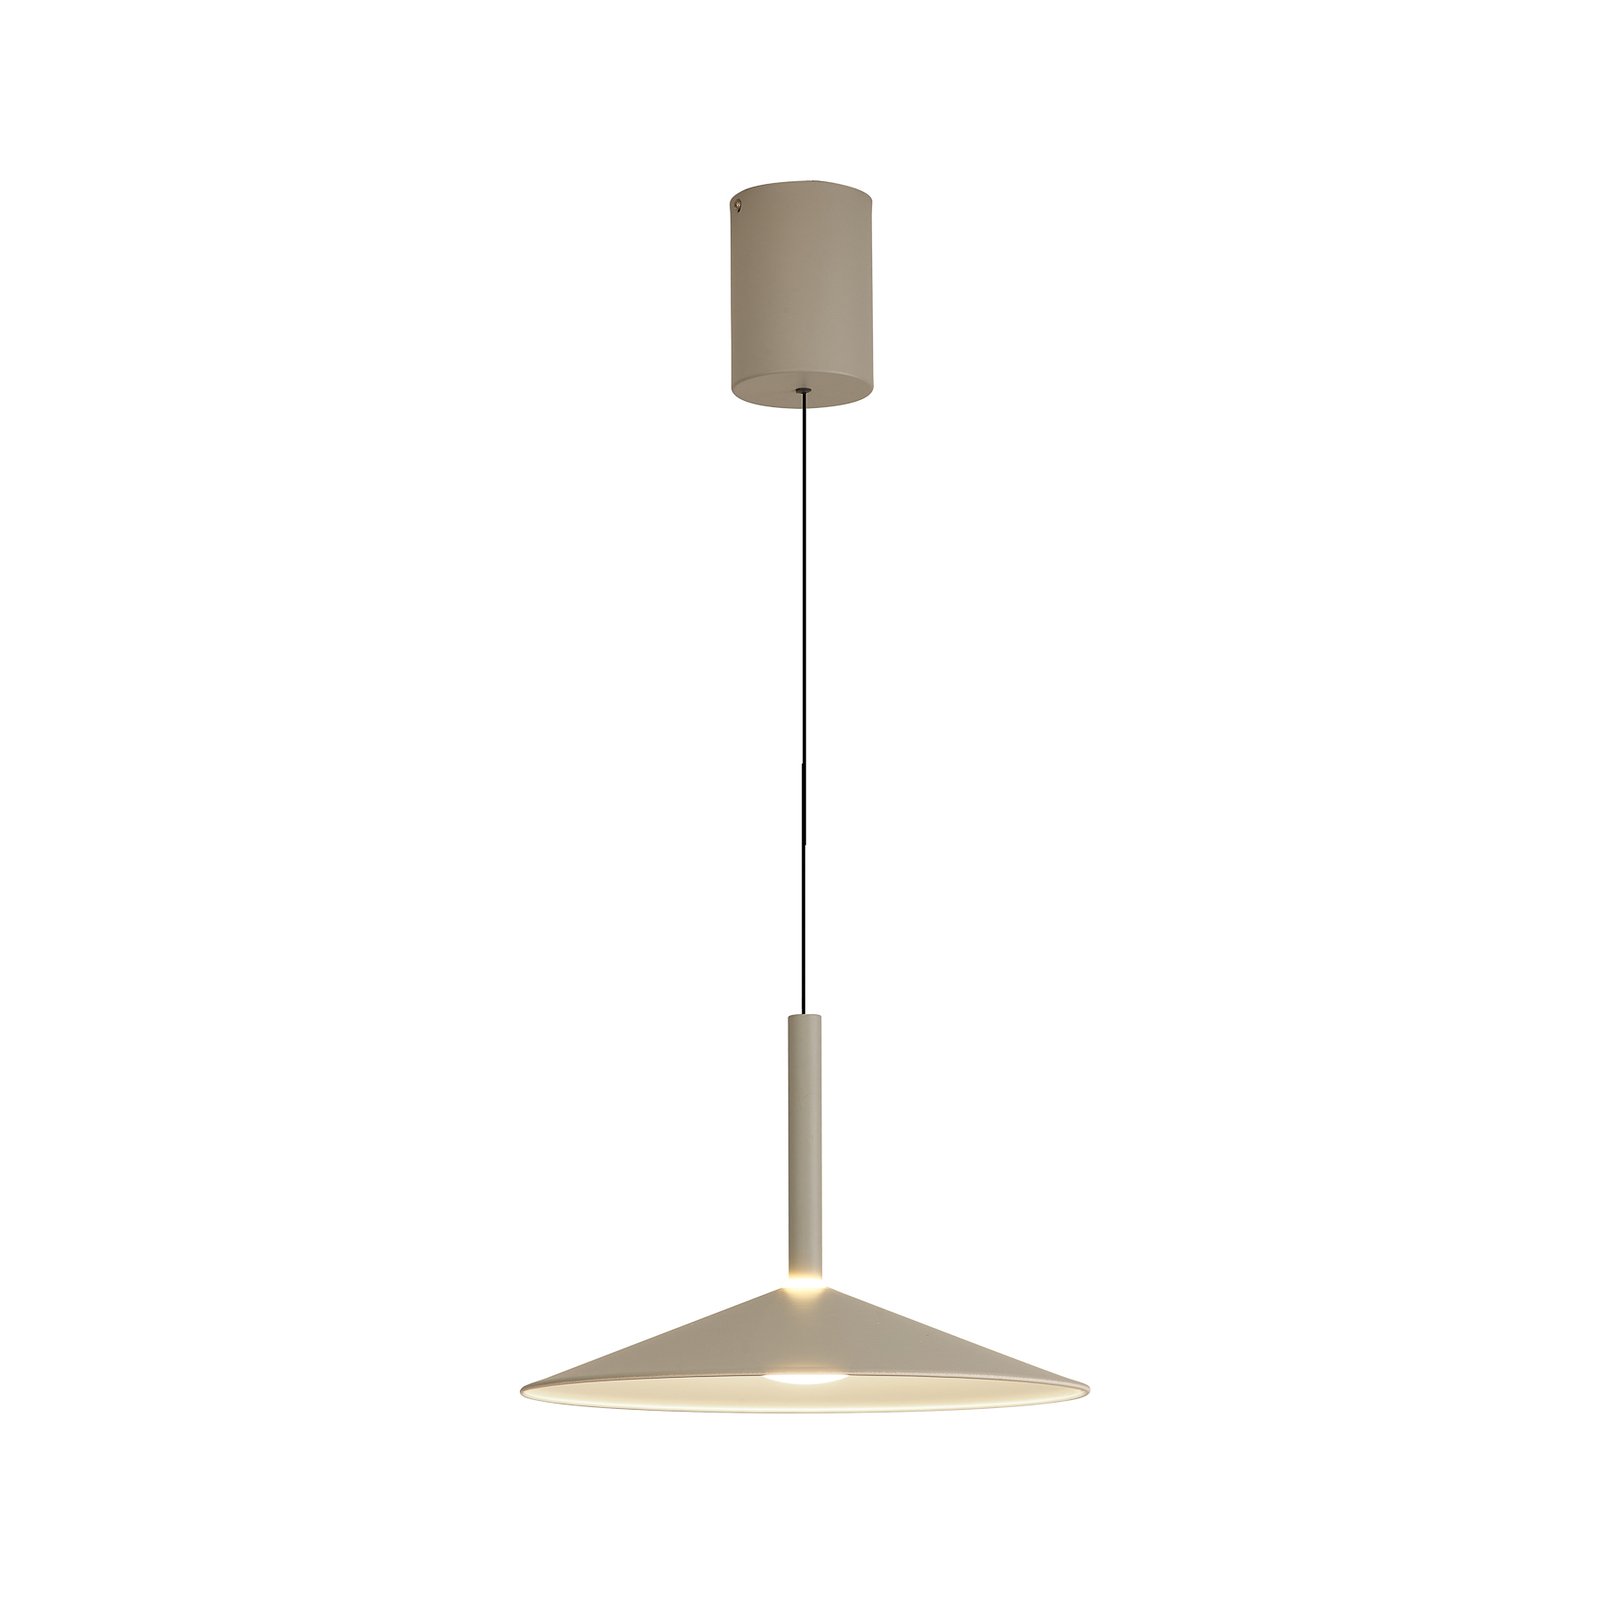 Lampada a sospensione Calice LED, grigio, Ø 32 cm, regolabile in altezza